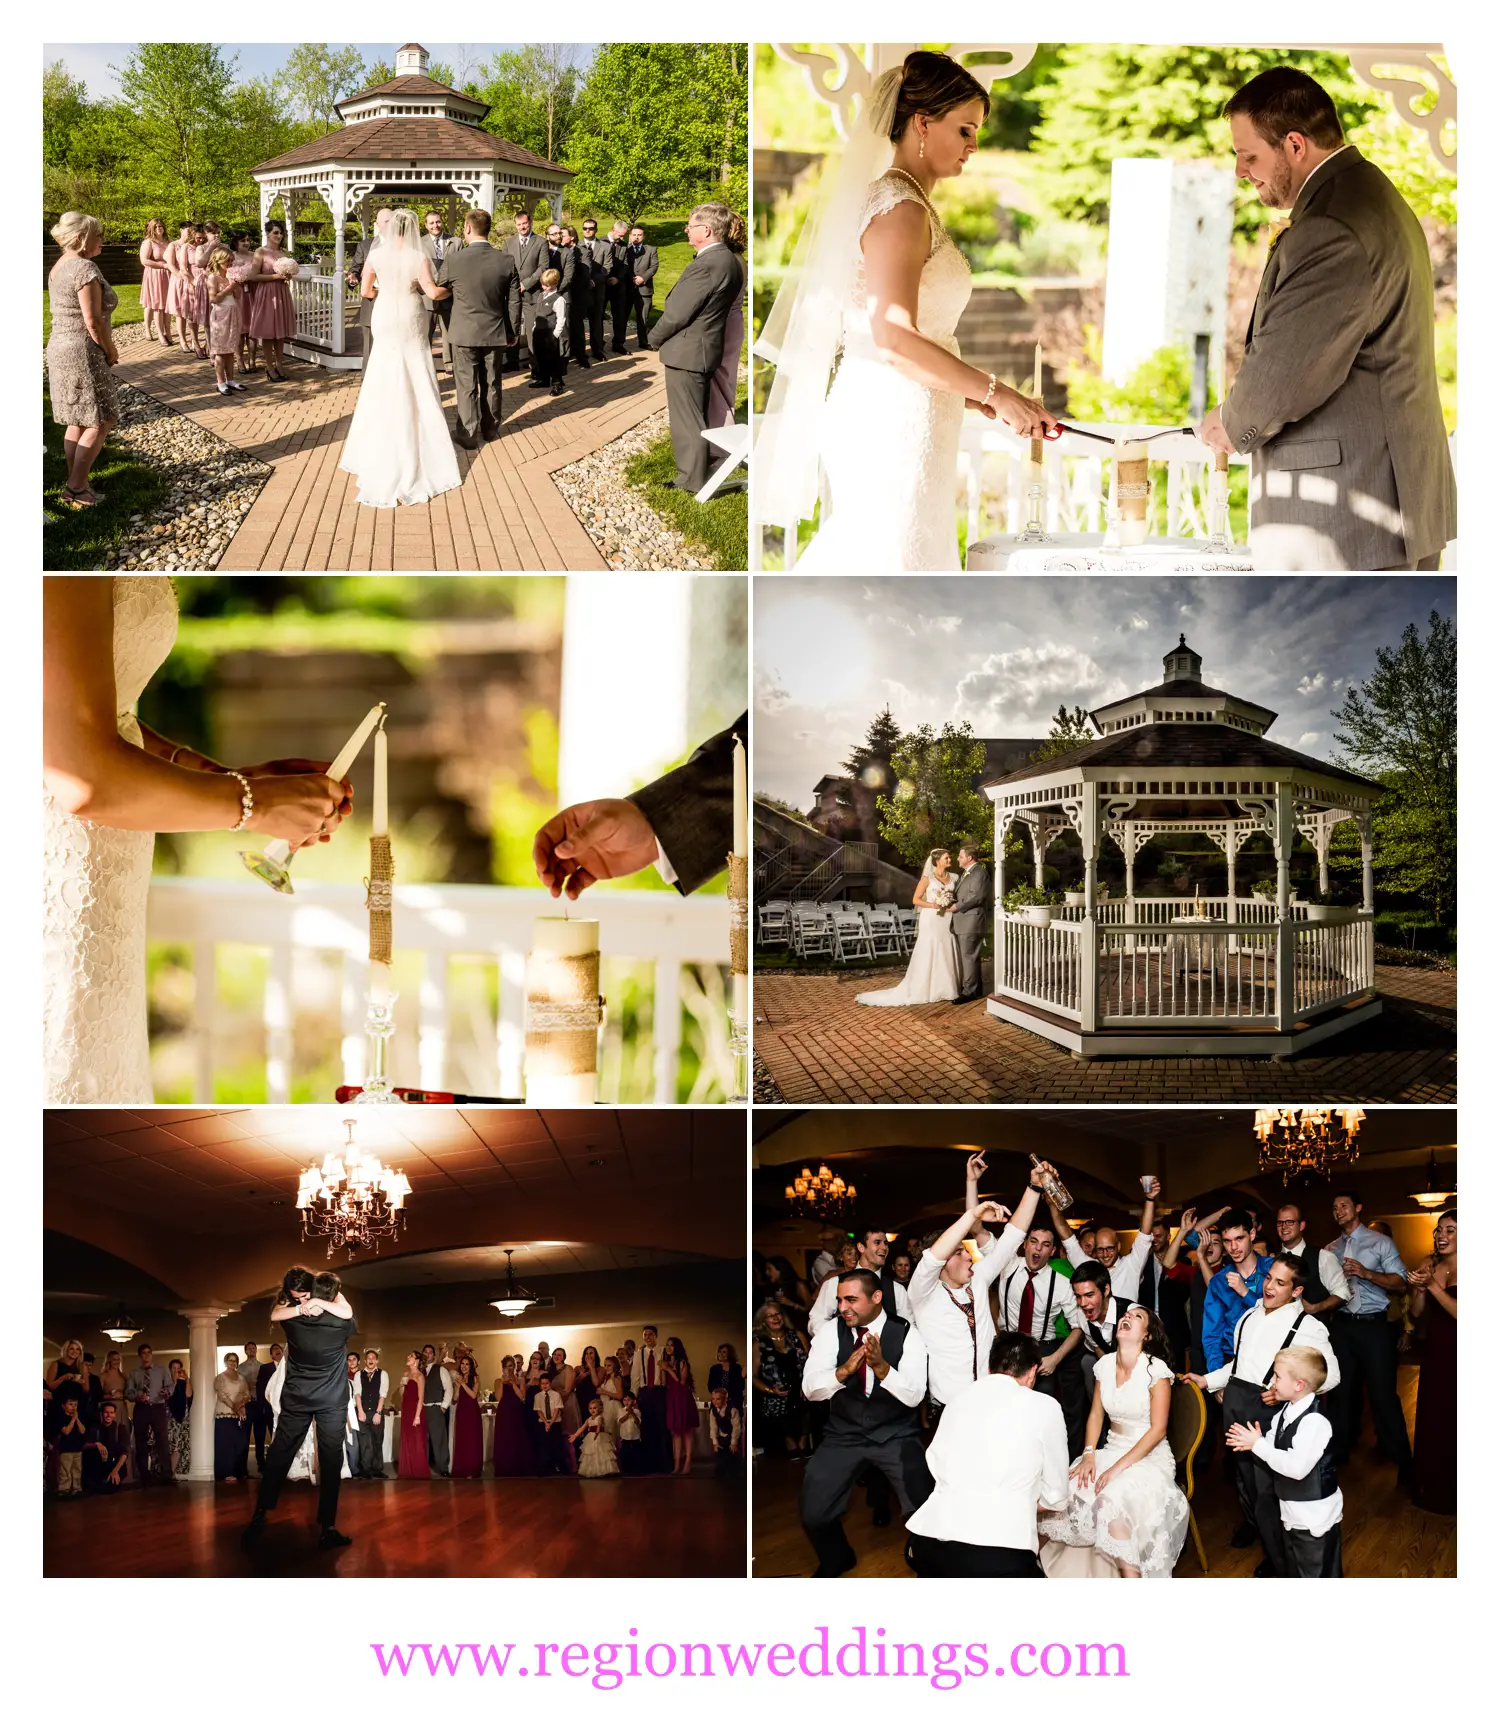 Best Wedding Venues In Northwest Indiana 2015 Edition